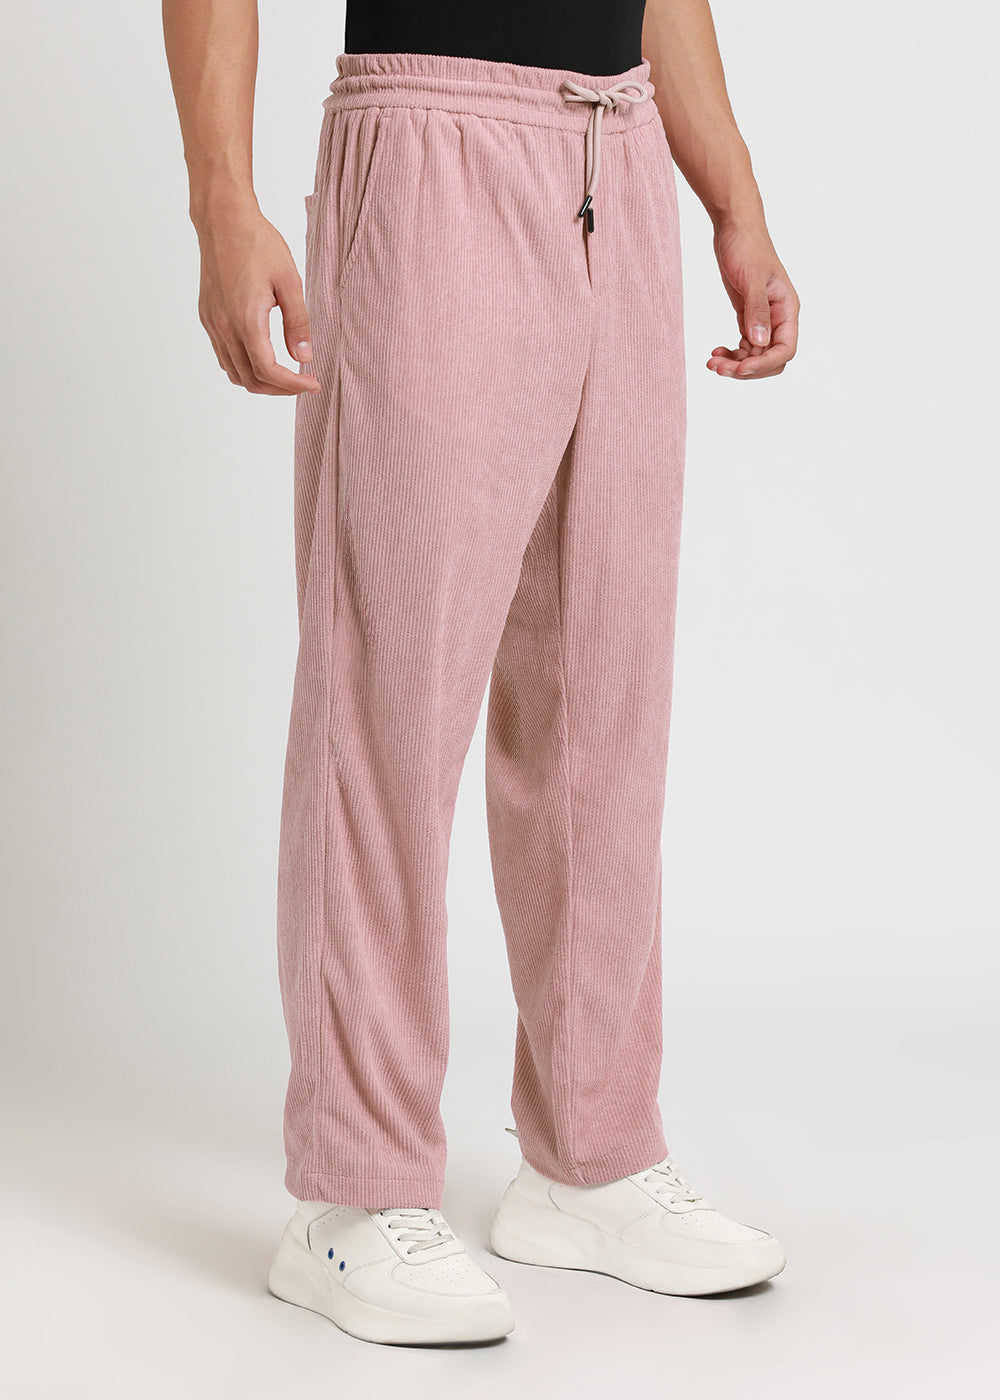 Mauve Pink Corduroy Pants